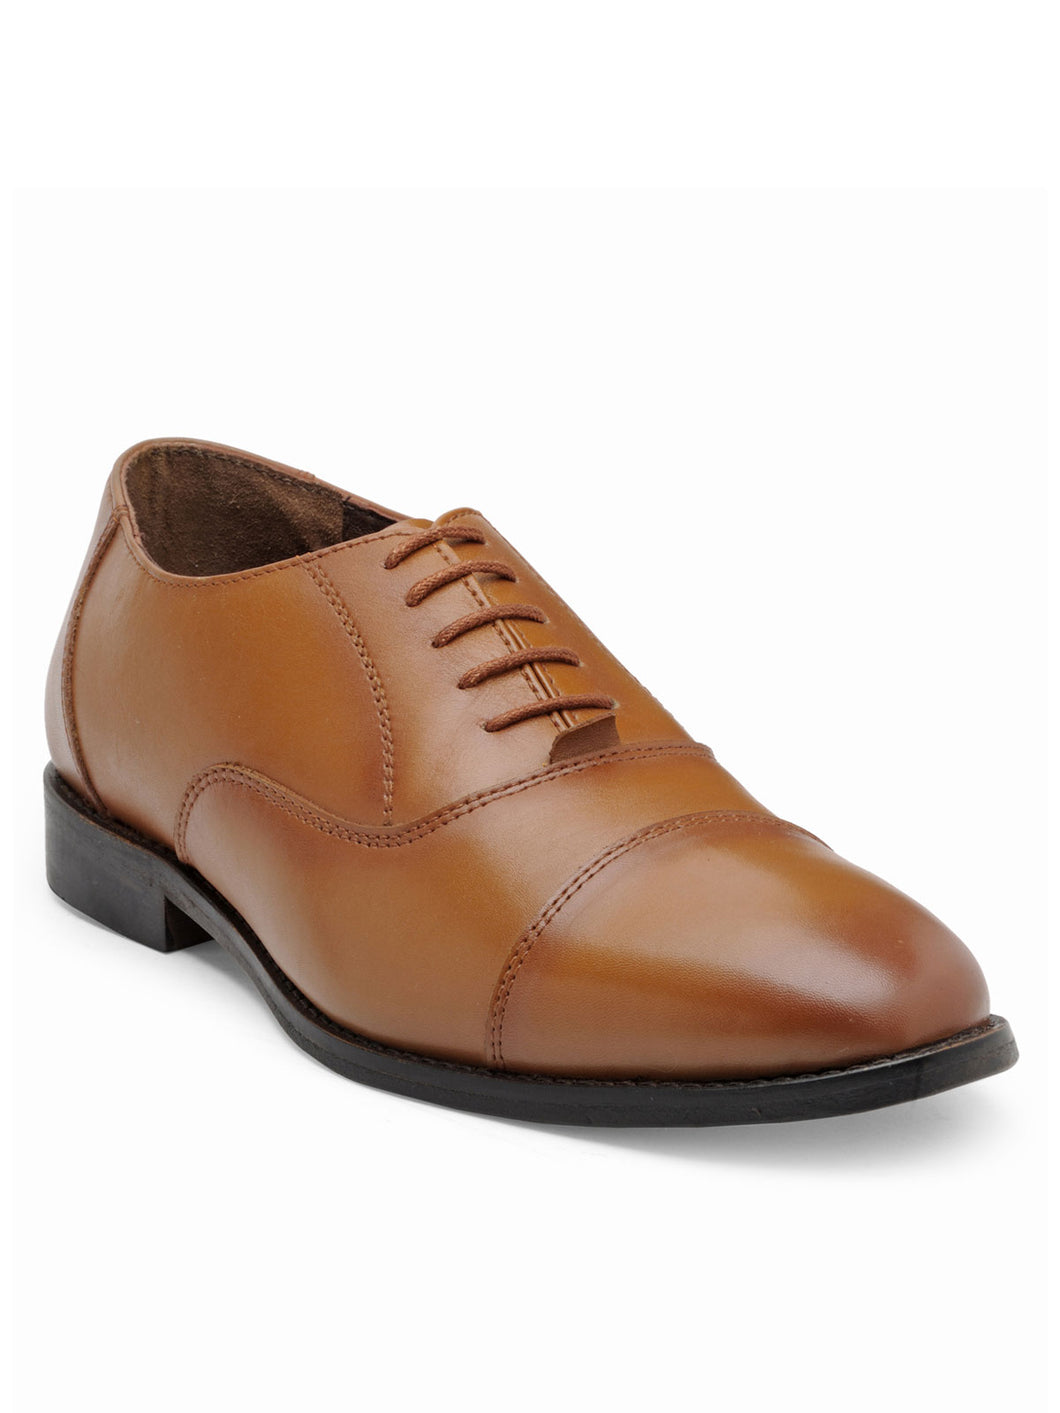 Teakwood Leather Men's Tan Oxford/Brogue Shoes